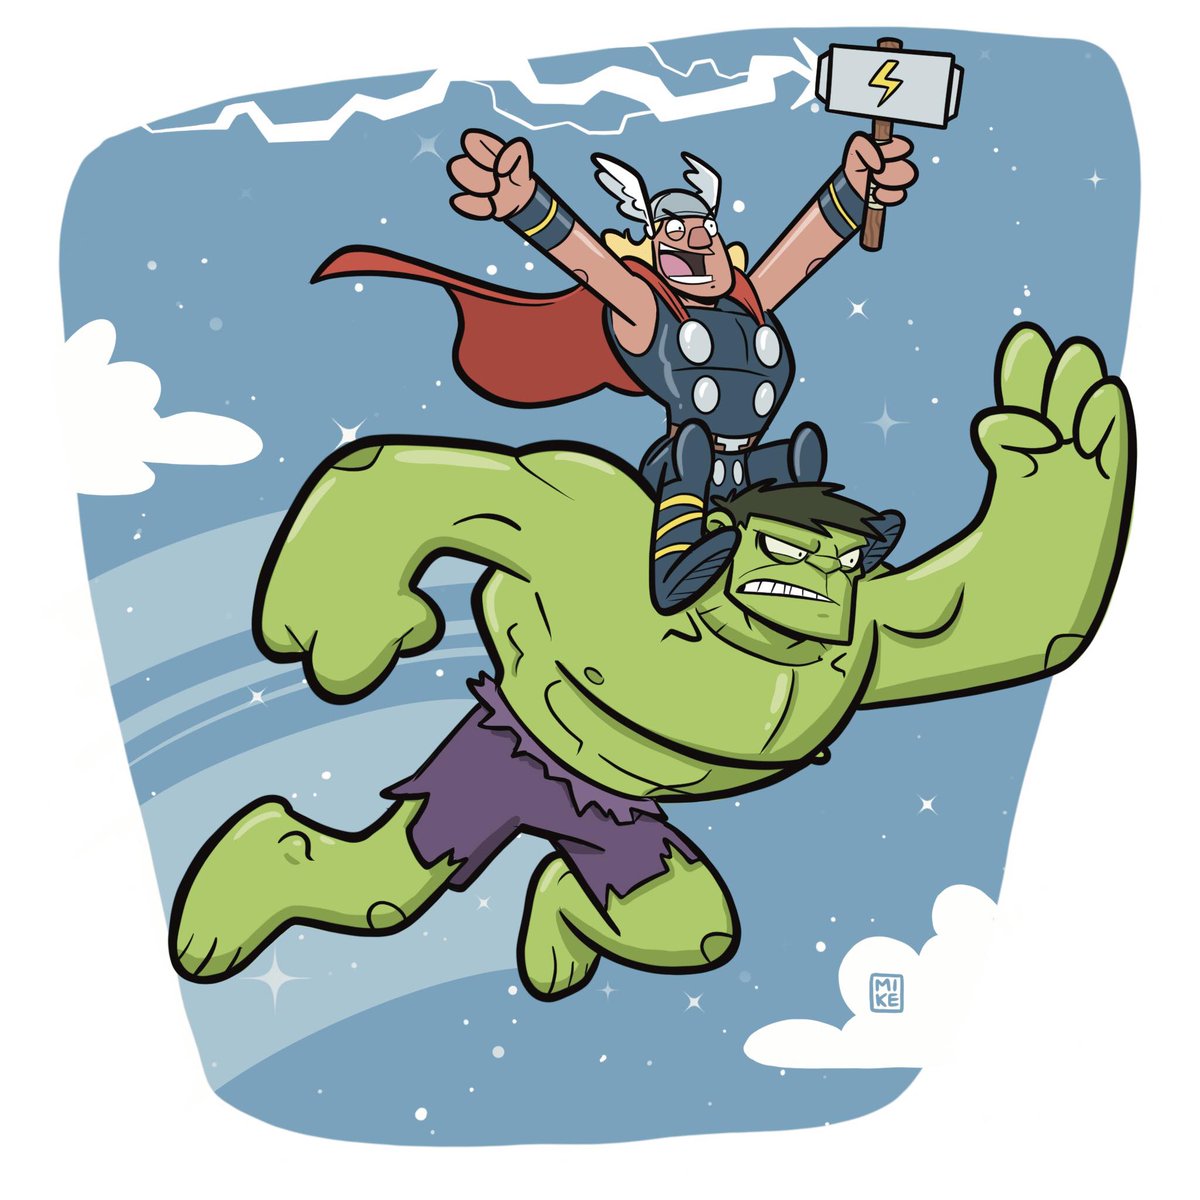 RT @mikehartigan: Friends from work
#hulksmashsaturday #hulk #thor #marvel #kidlitart #comics @JMontoyaArtist https://t.co/23L3SeM5wO